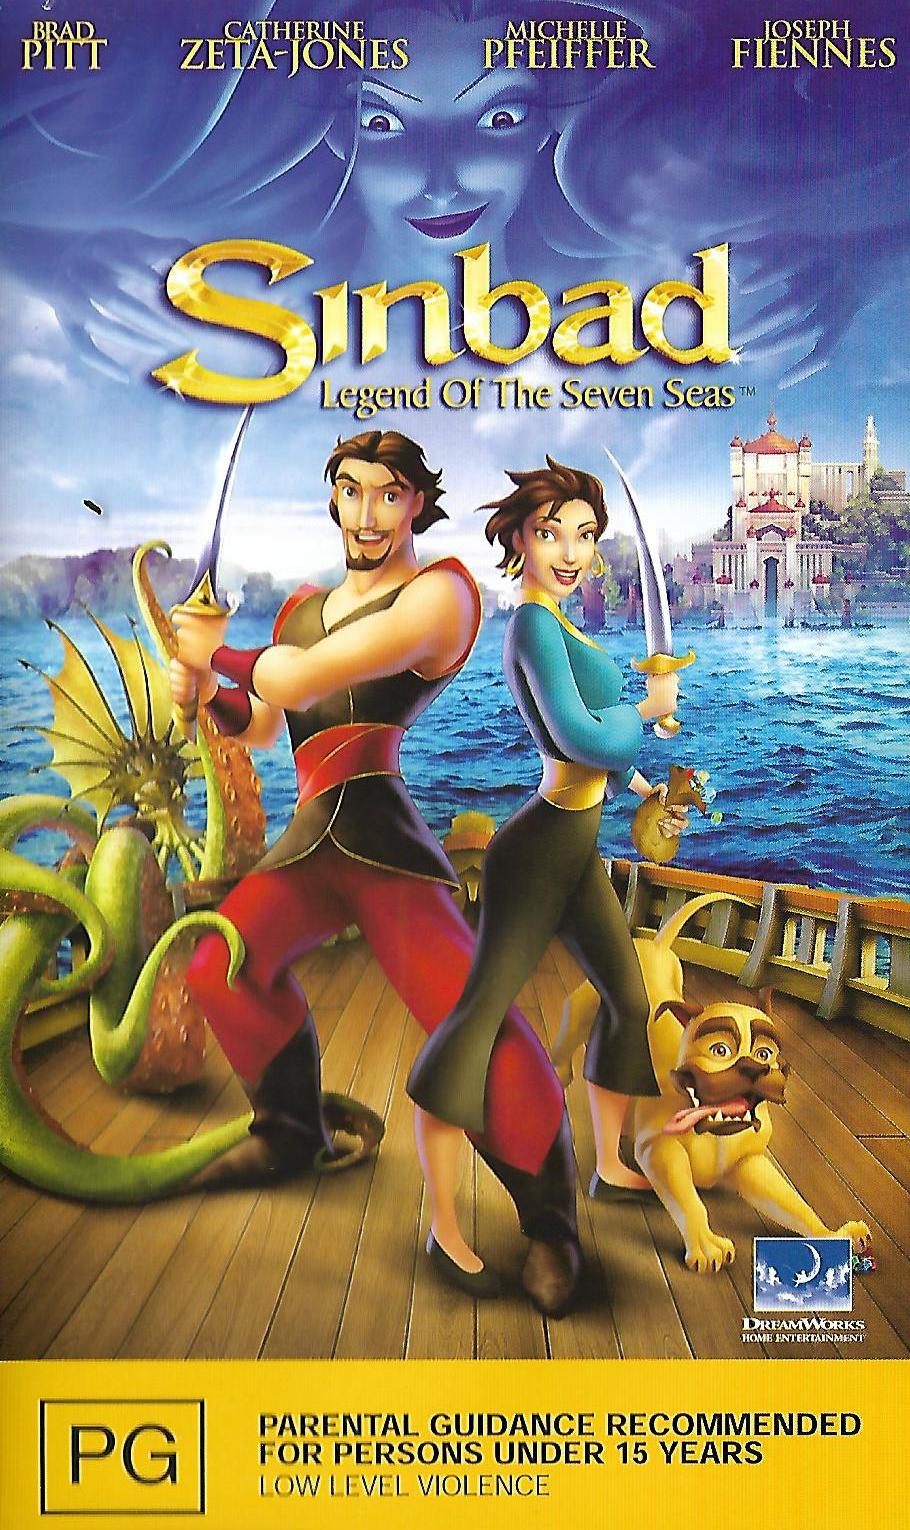 Sinbad 2003 VHS | Disney vhs openings Wiki | Fandom